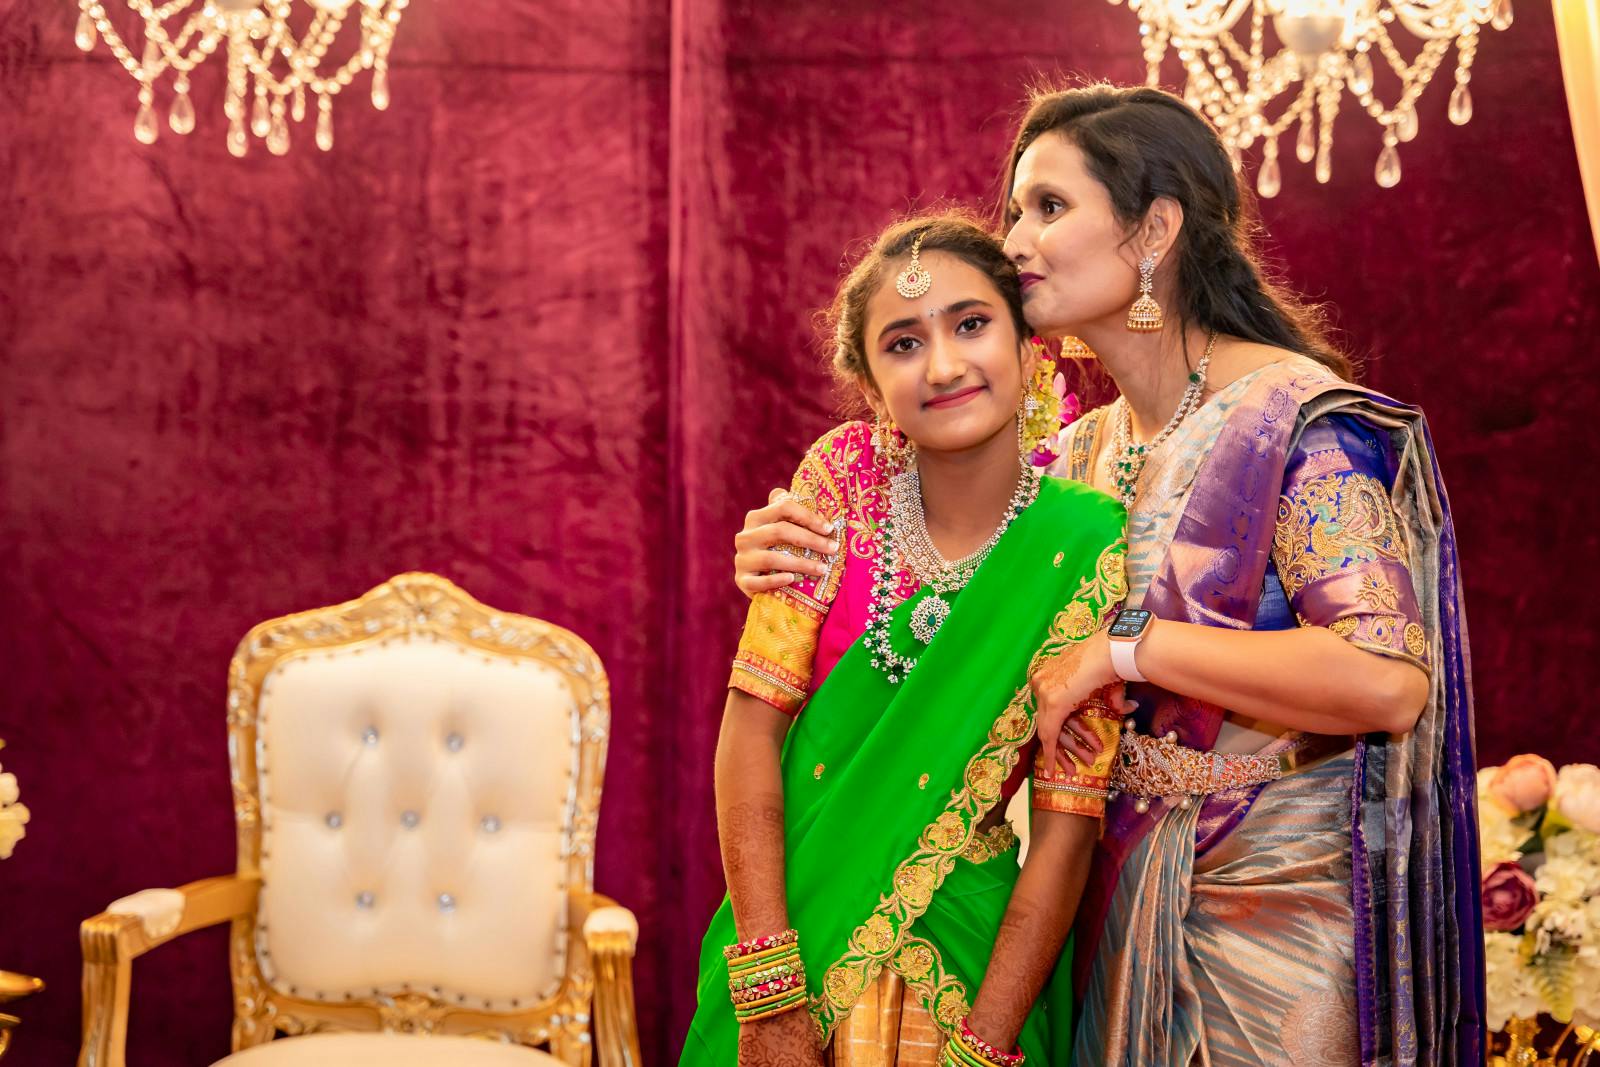 How Puberty Ceremonies Went the Way of Indian Weddings